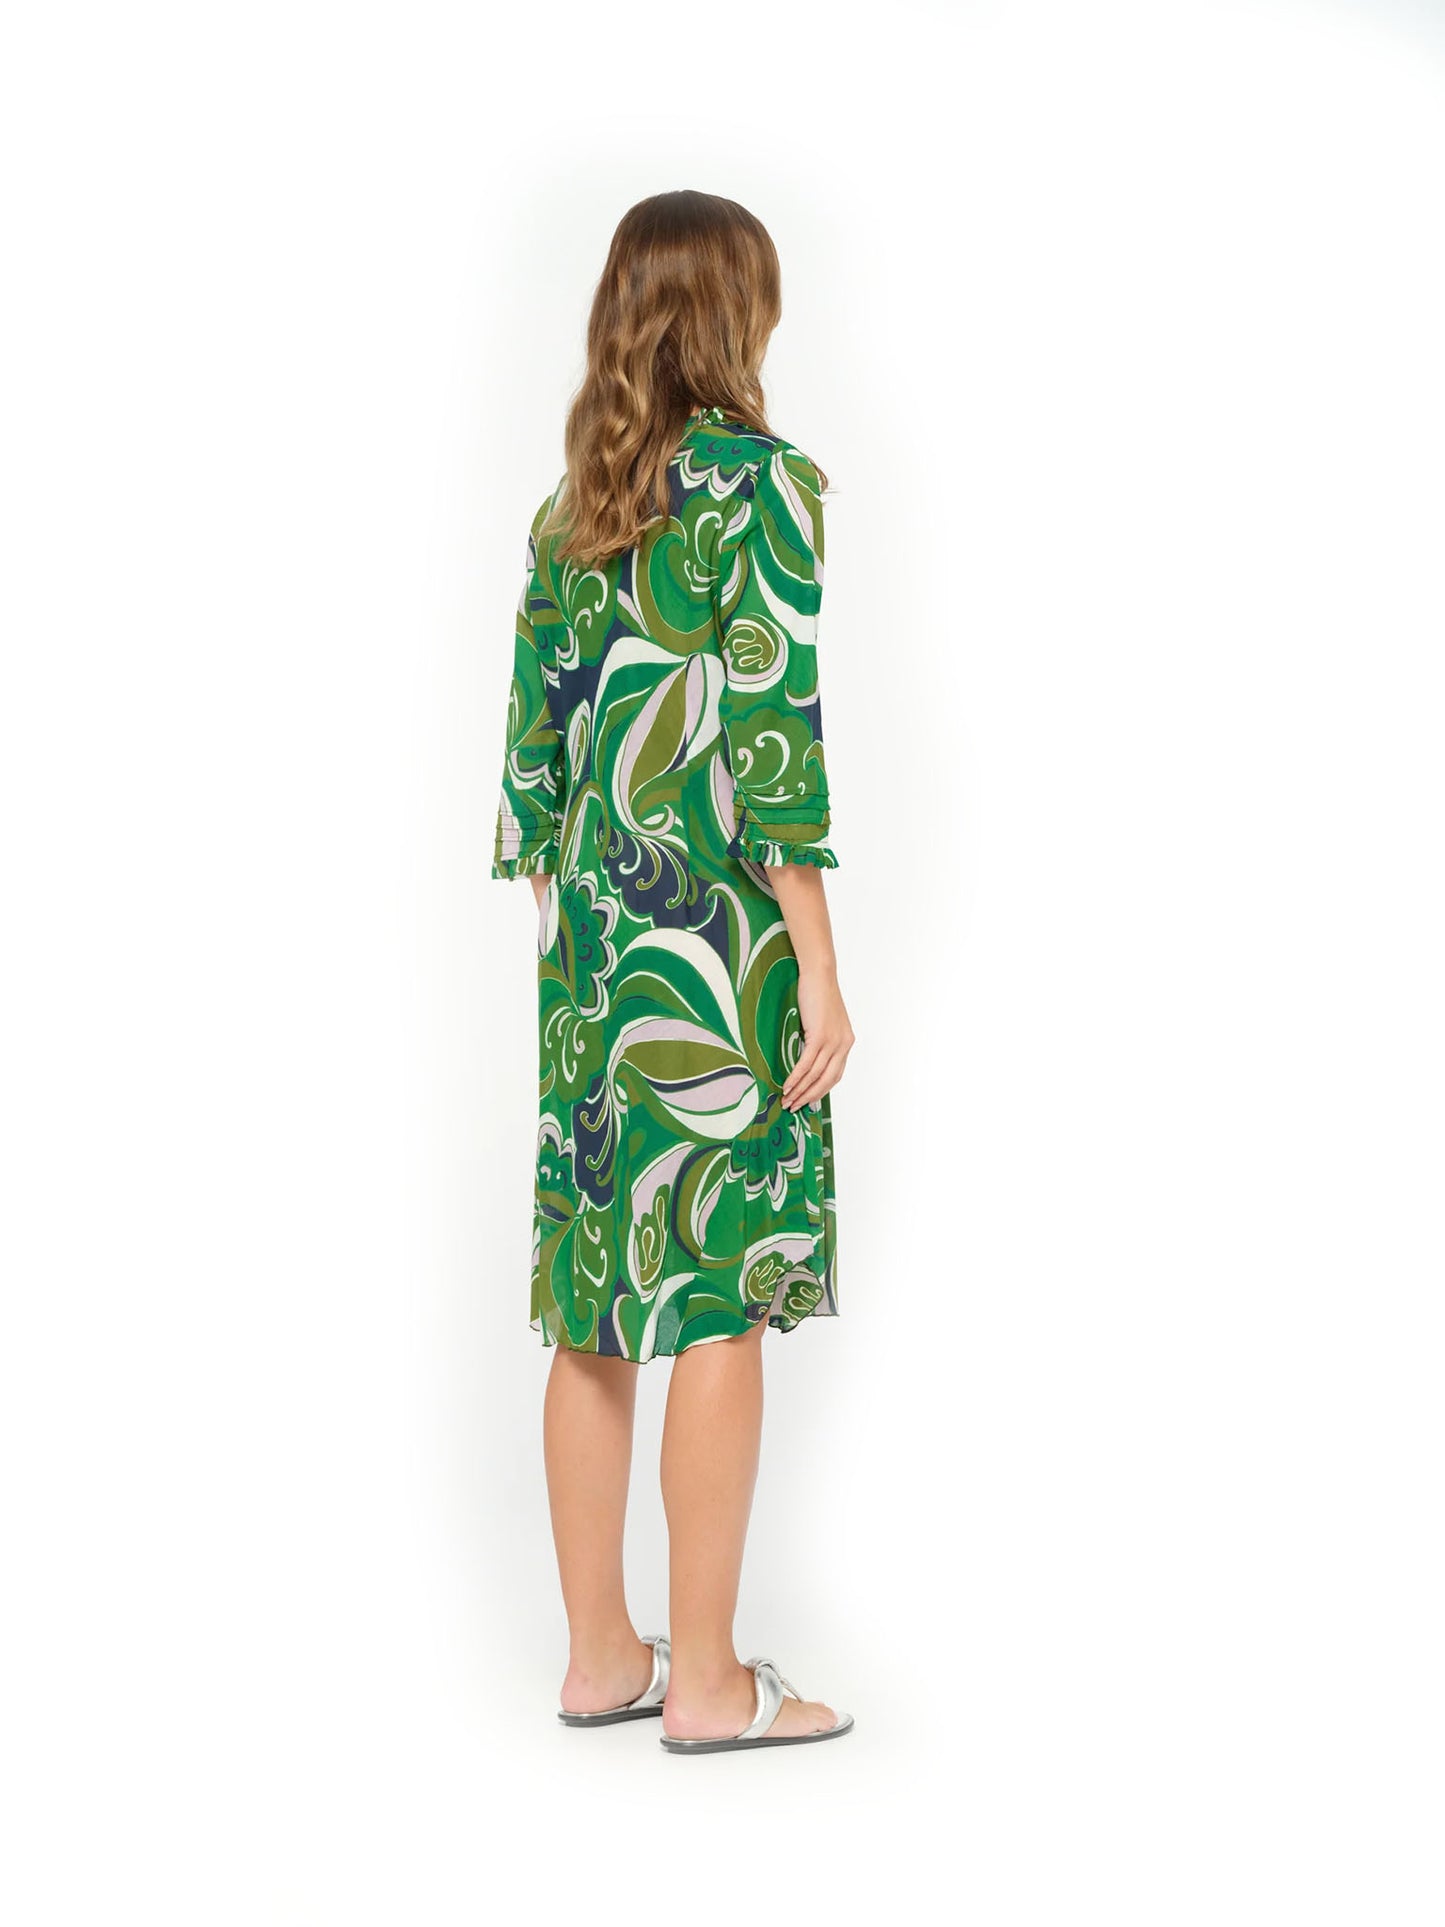 One Season Middy Poppy Costa Nova Emerald Dress Back Cutout